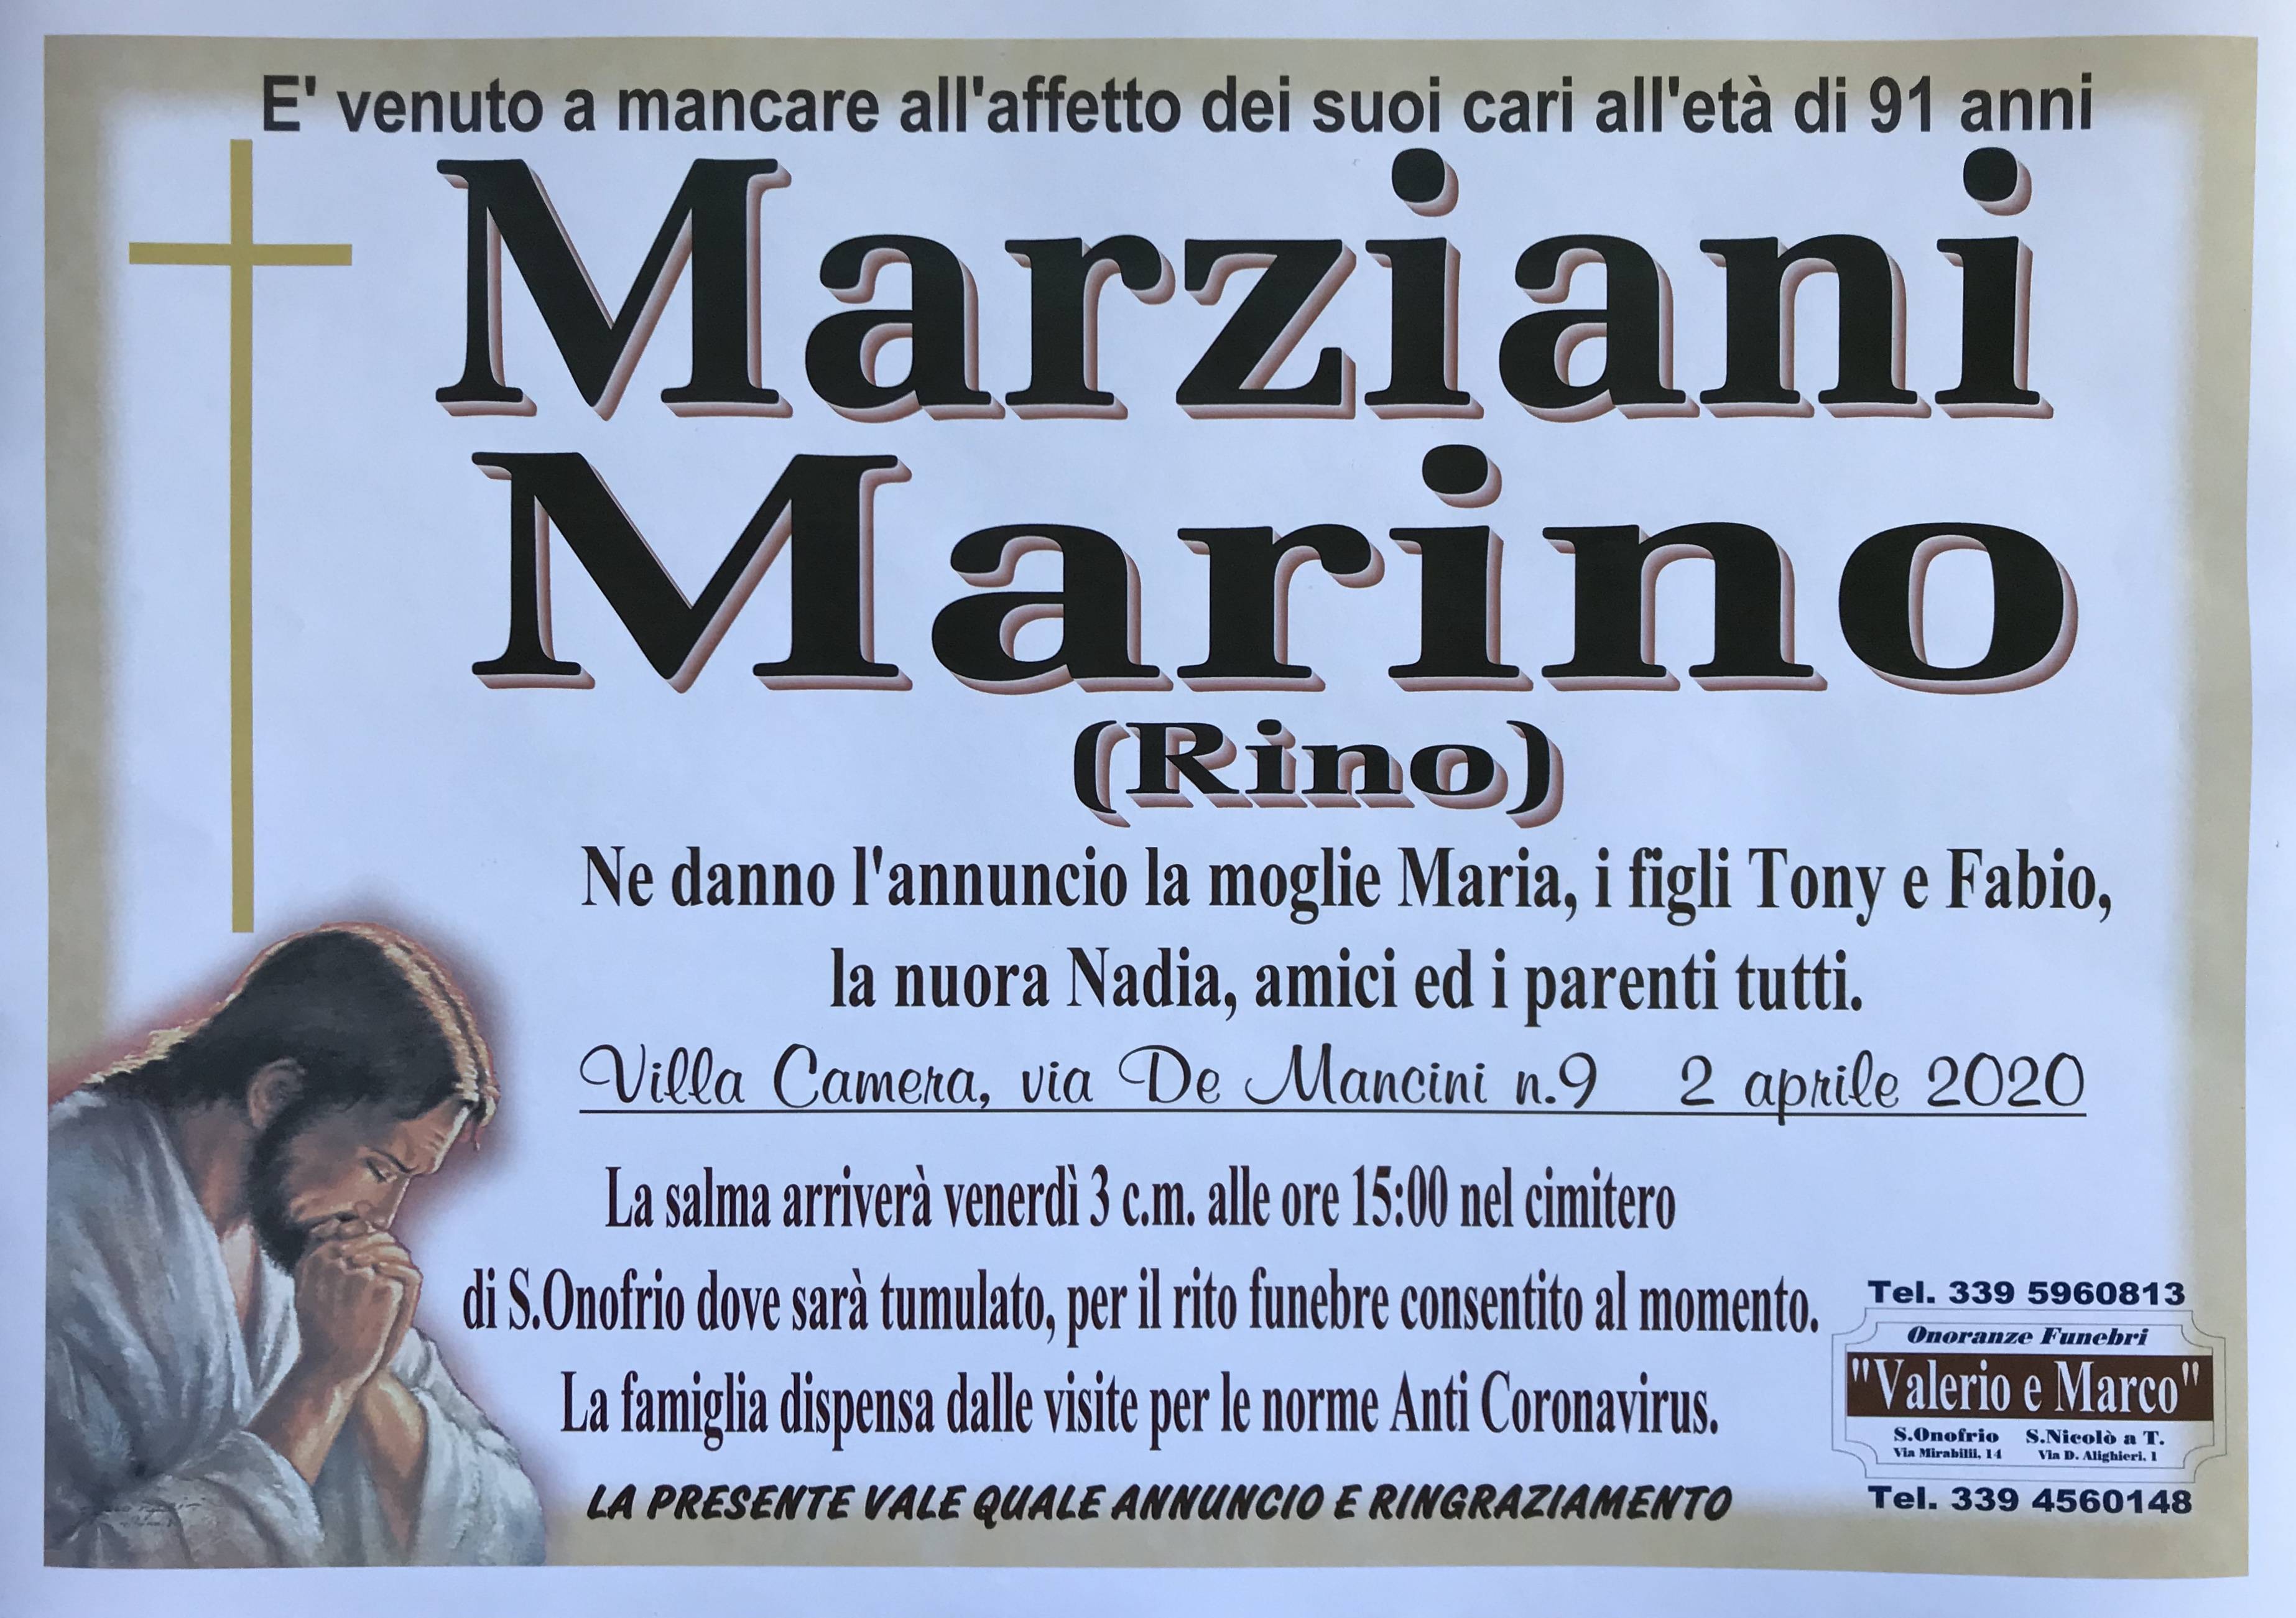 Marino Marziani